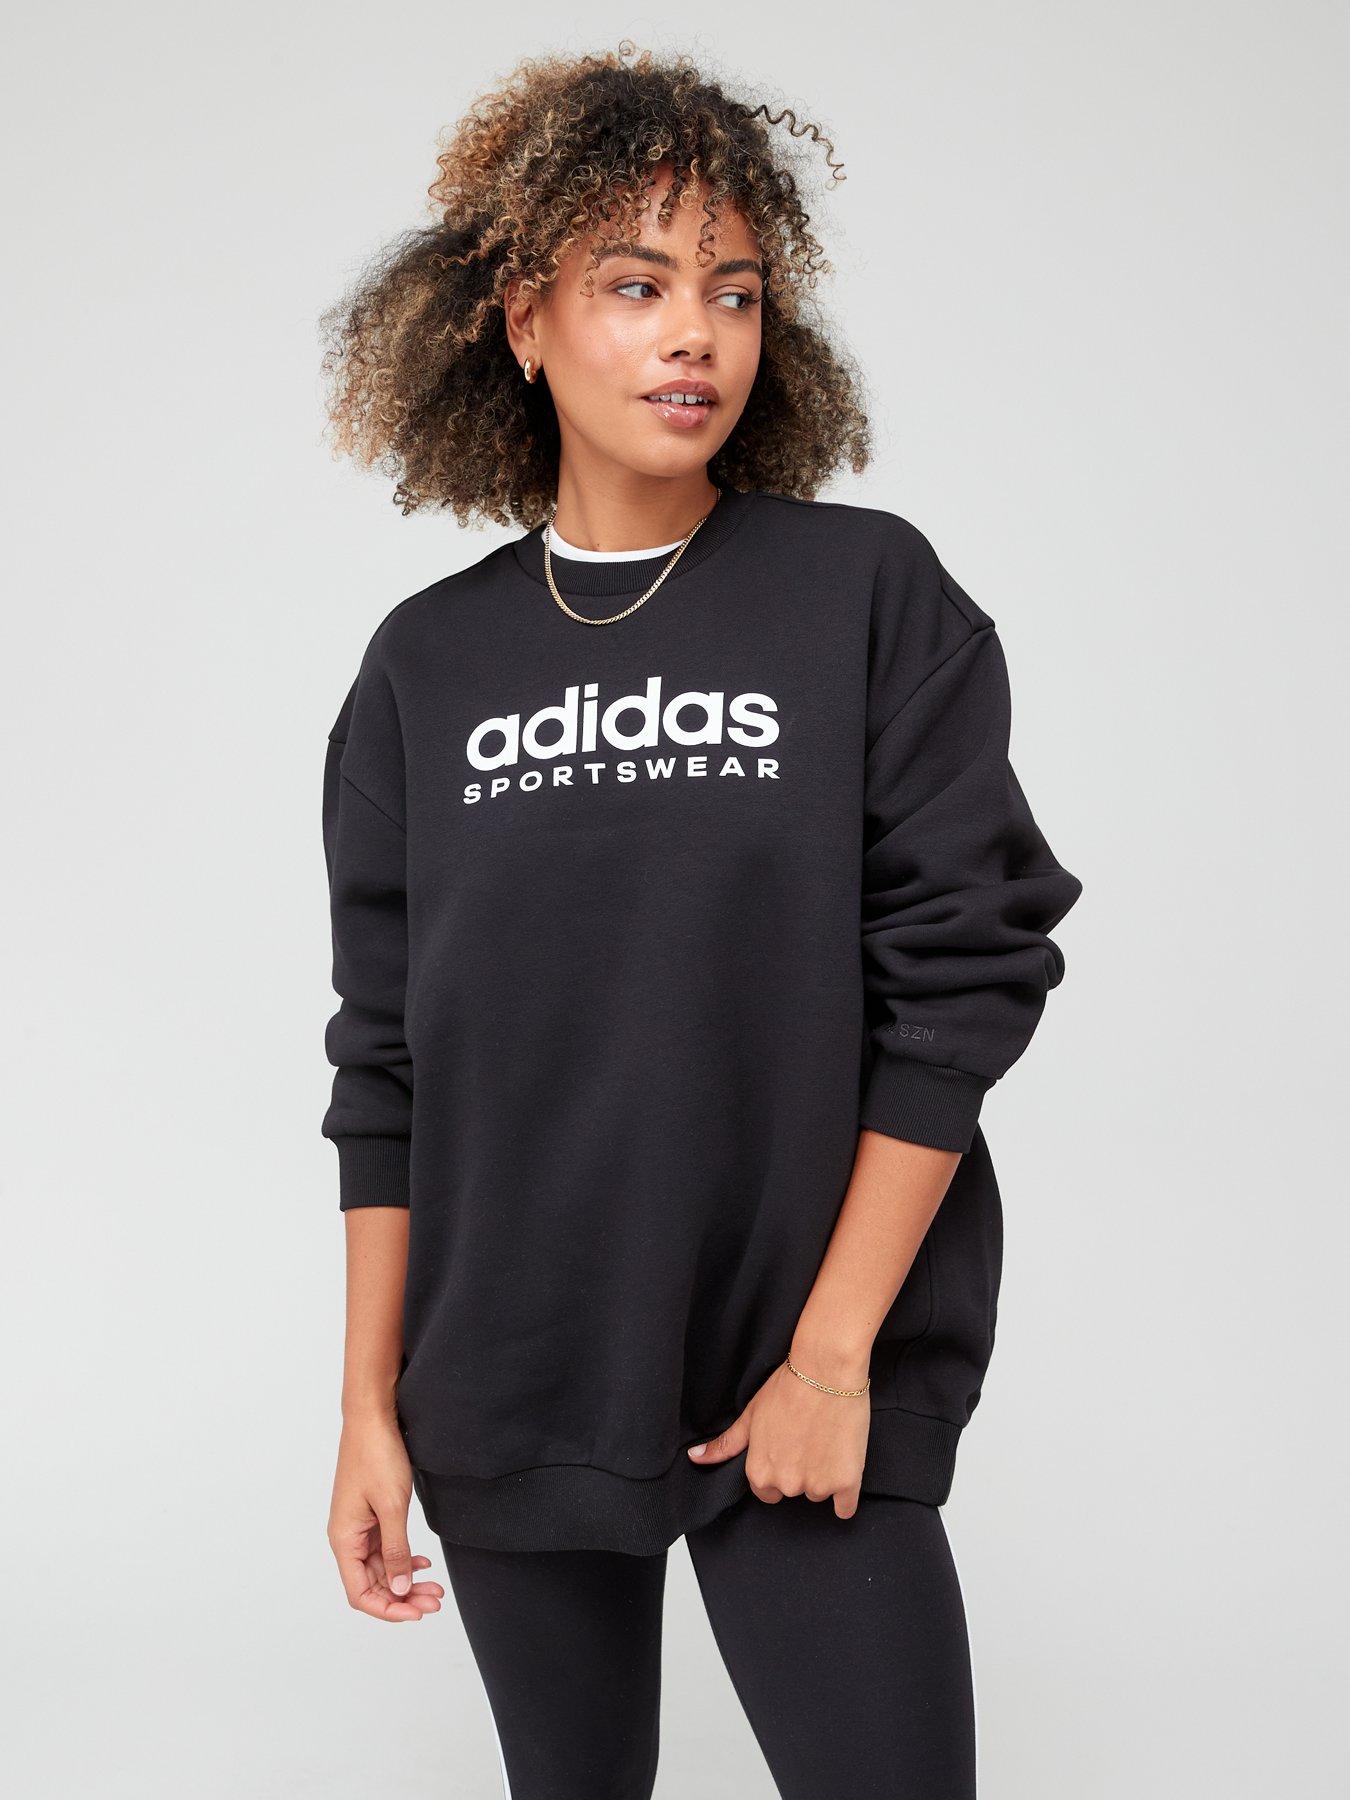 adidas Sportswear All Szn Sweatshirt - Graphic Fleece Black